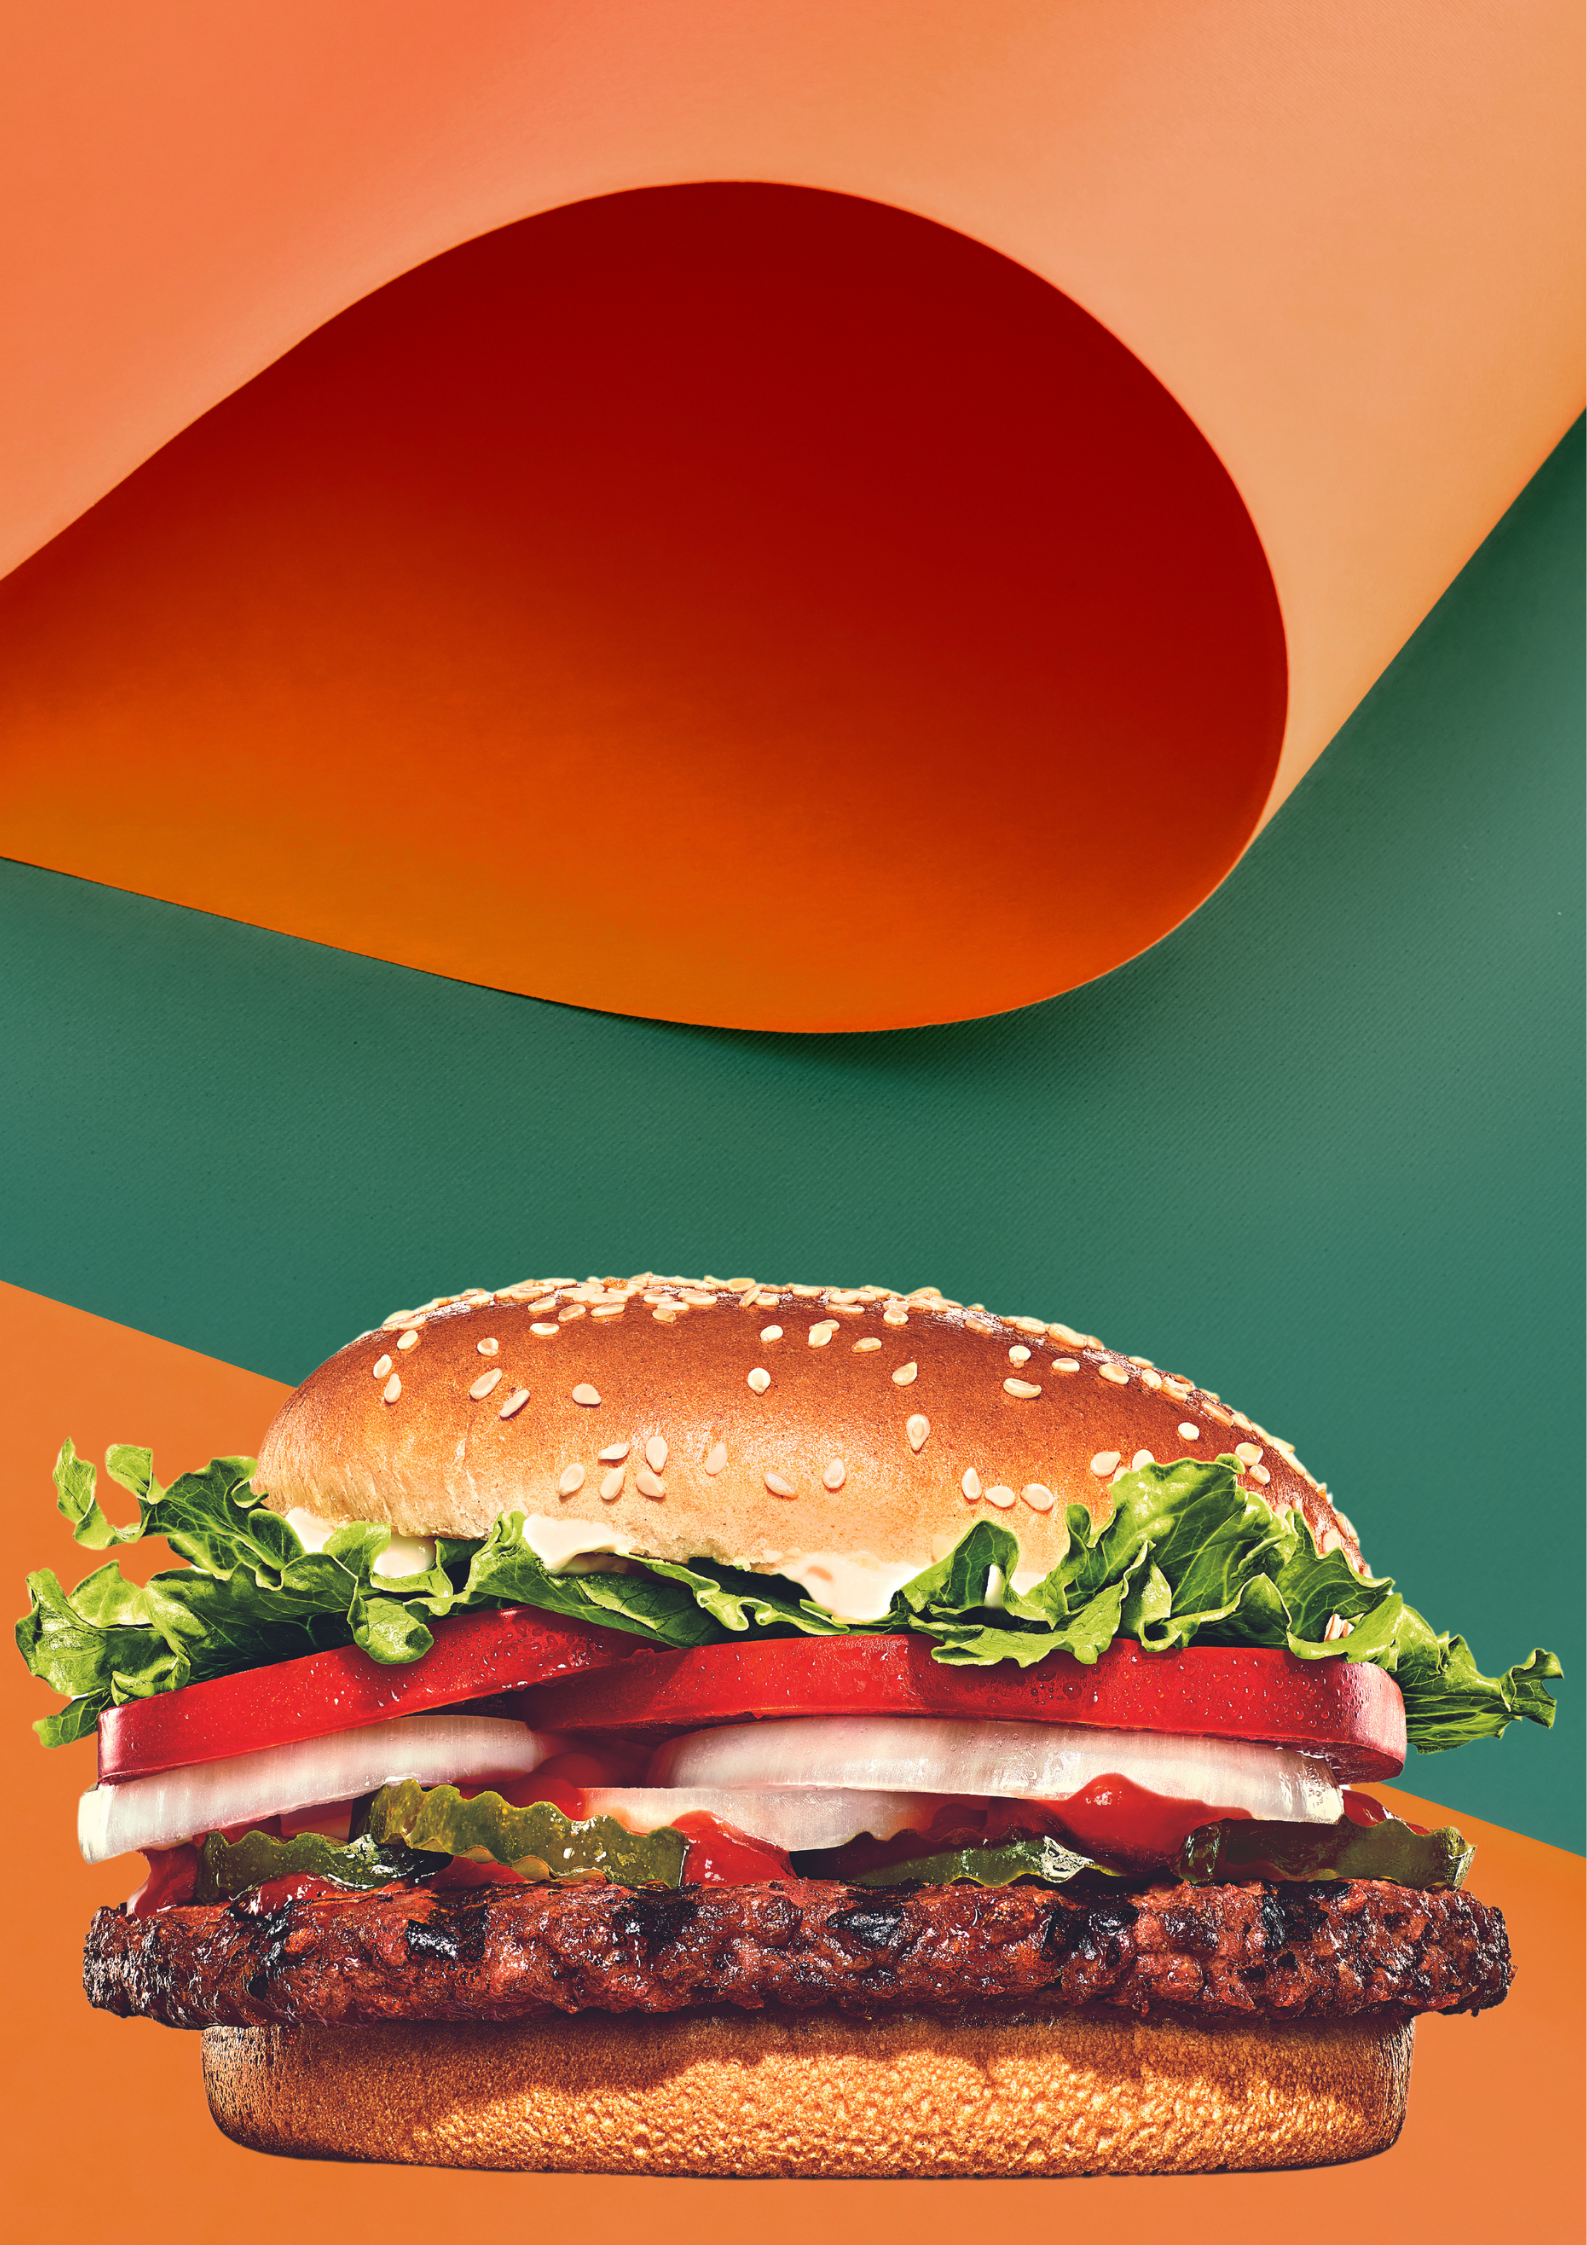 Rebel Whopper burger king